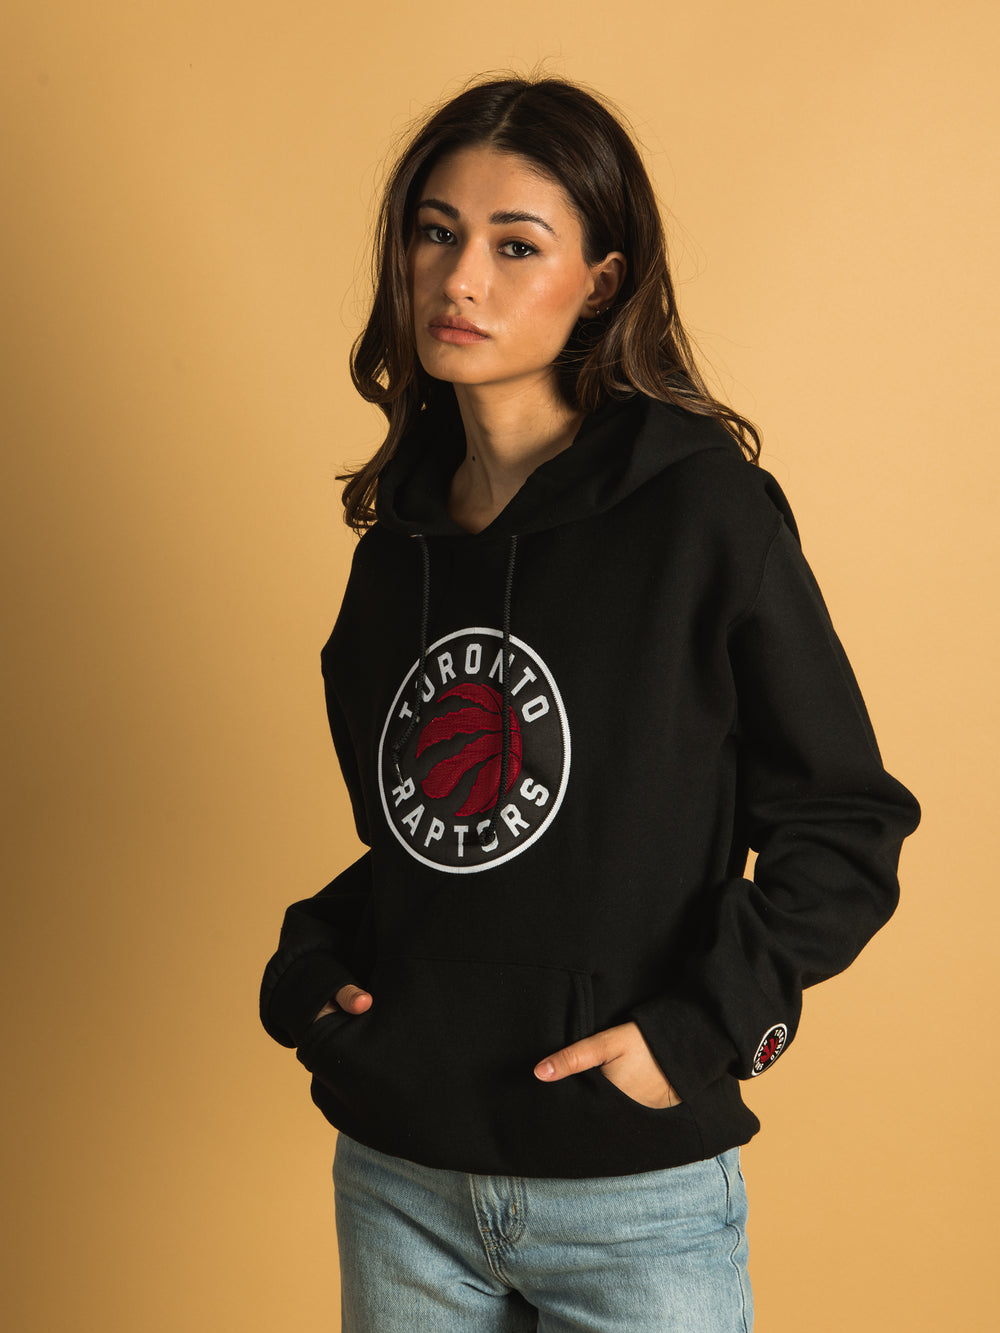 NBA Toronto Raptors Hoodies & Sweatshirts Tops, Clothing